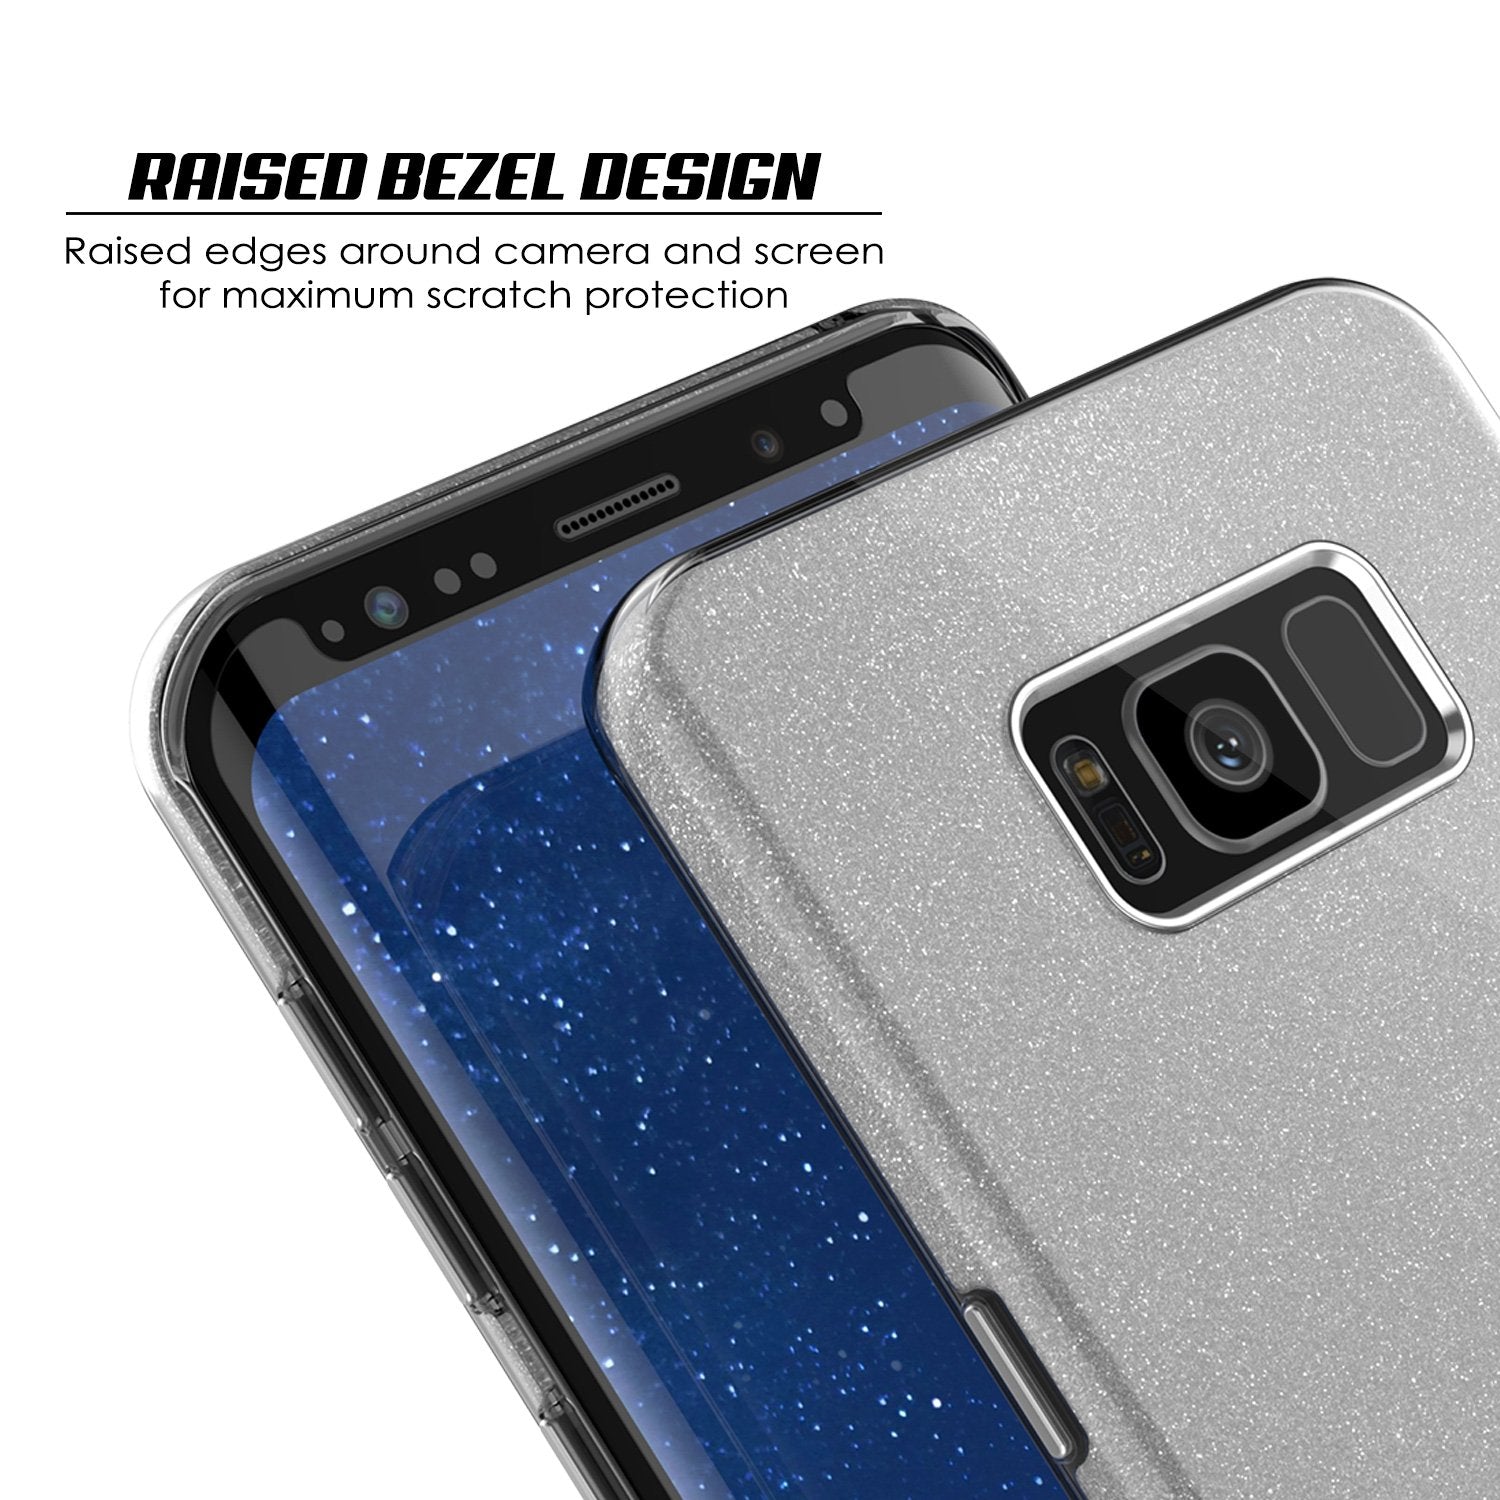 Galaxy S8 Plus Punkcase Galactic 2.0 Series Ultra Slim Case [Silver]